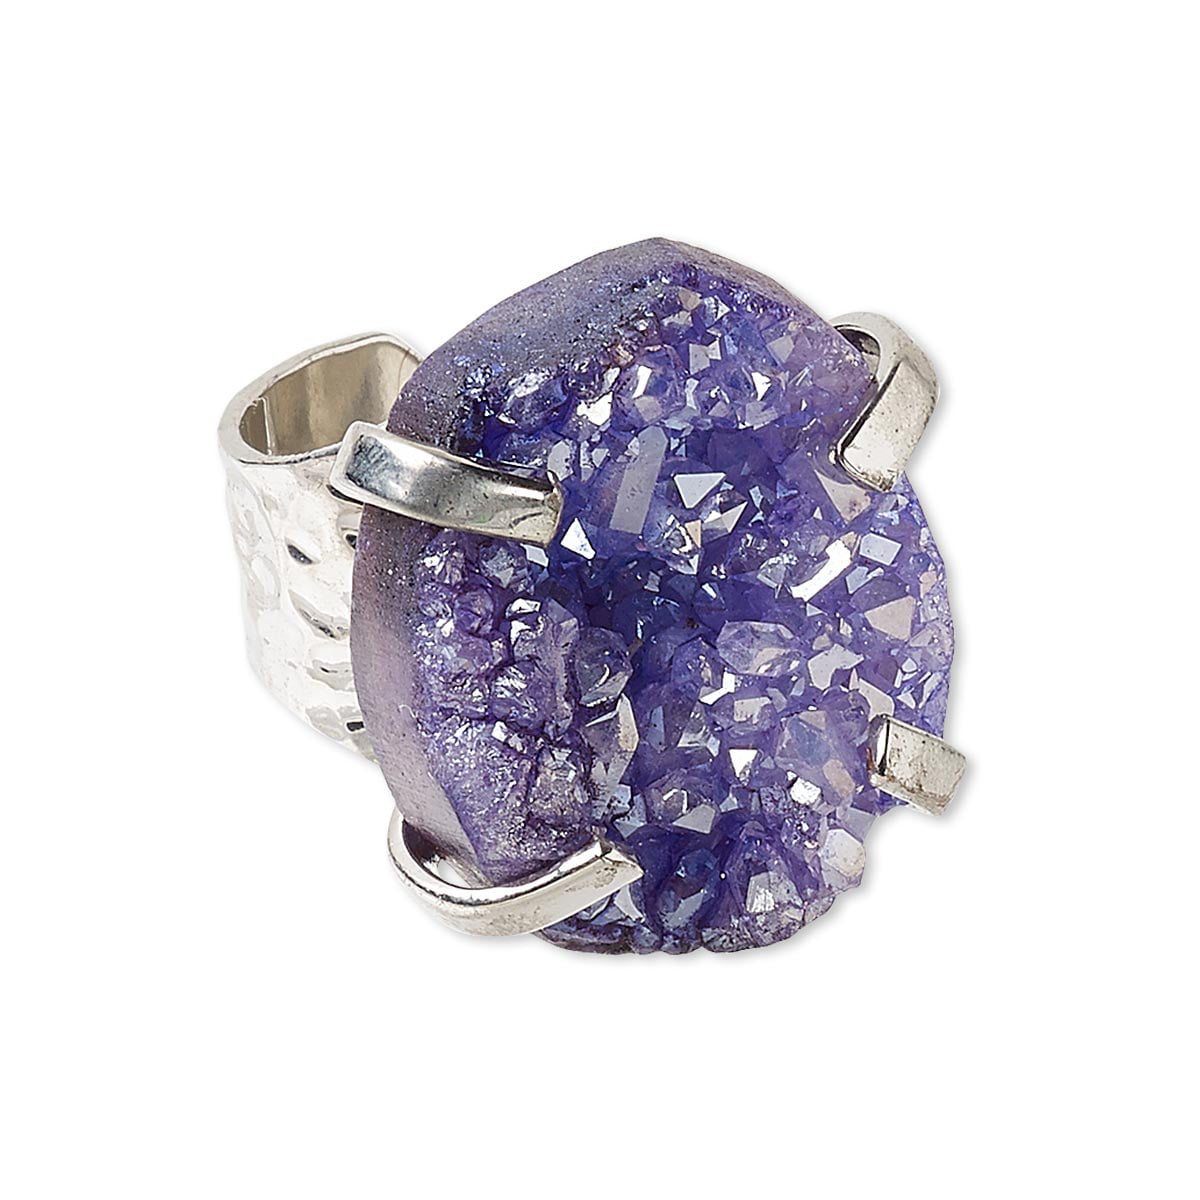 Purple Amethyst Druzy Gemstone Pendant Boho Pendant Electroplated Brass Pendant Necklace Jewelry Silver Plating Jewelry Making